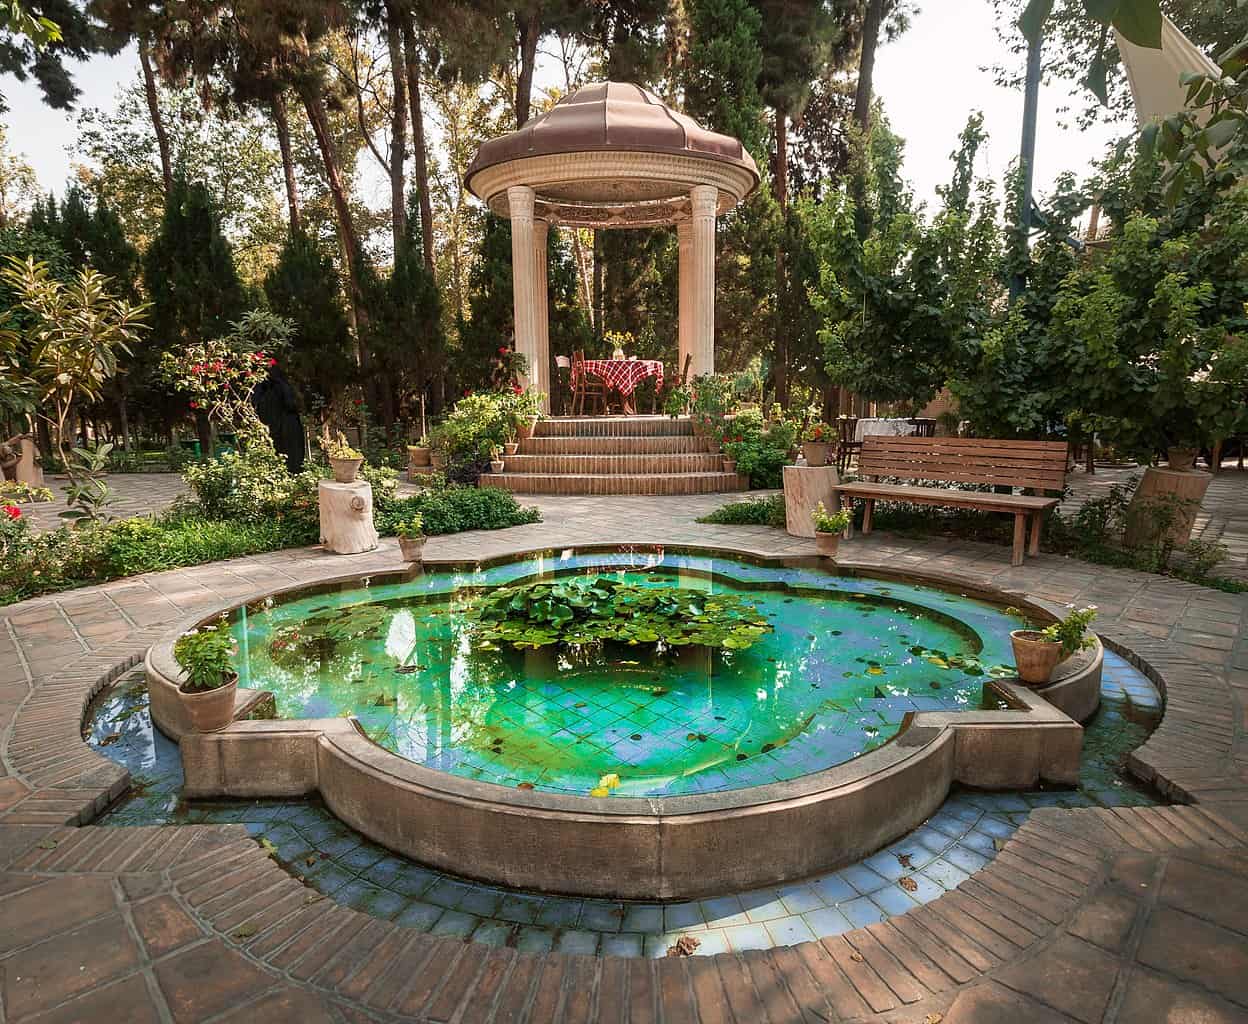 gardens in iran, persian culture